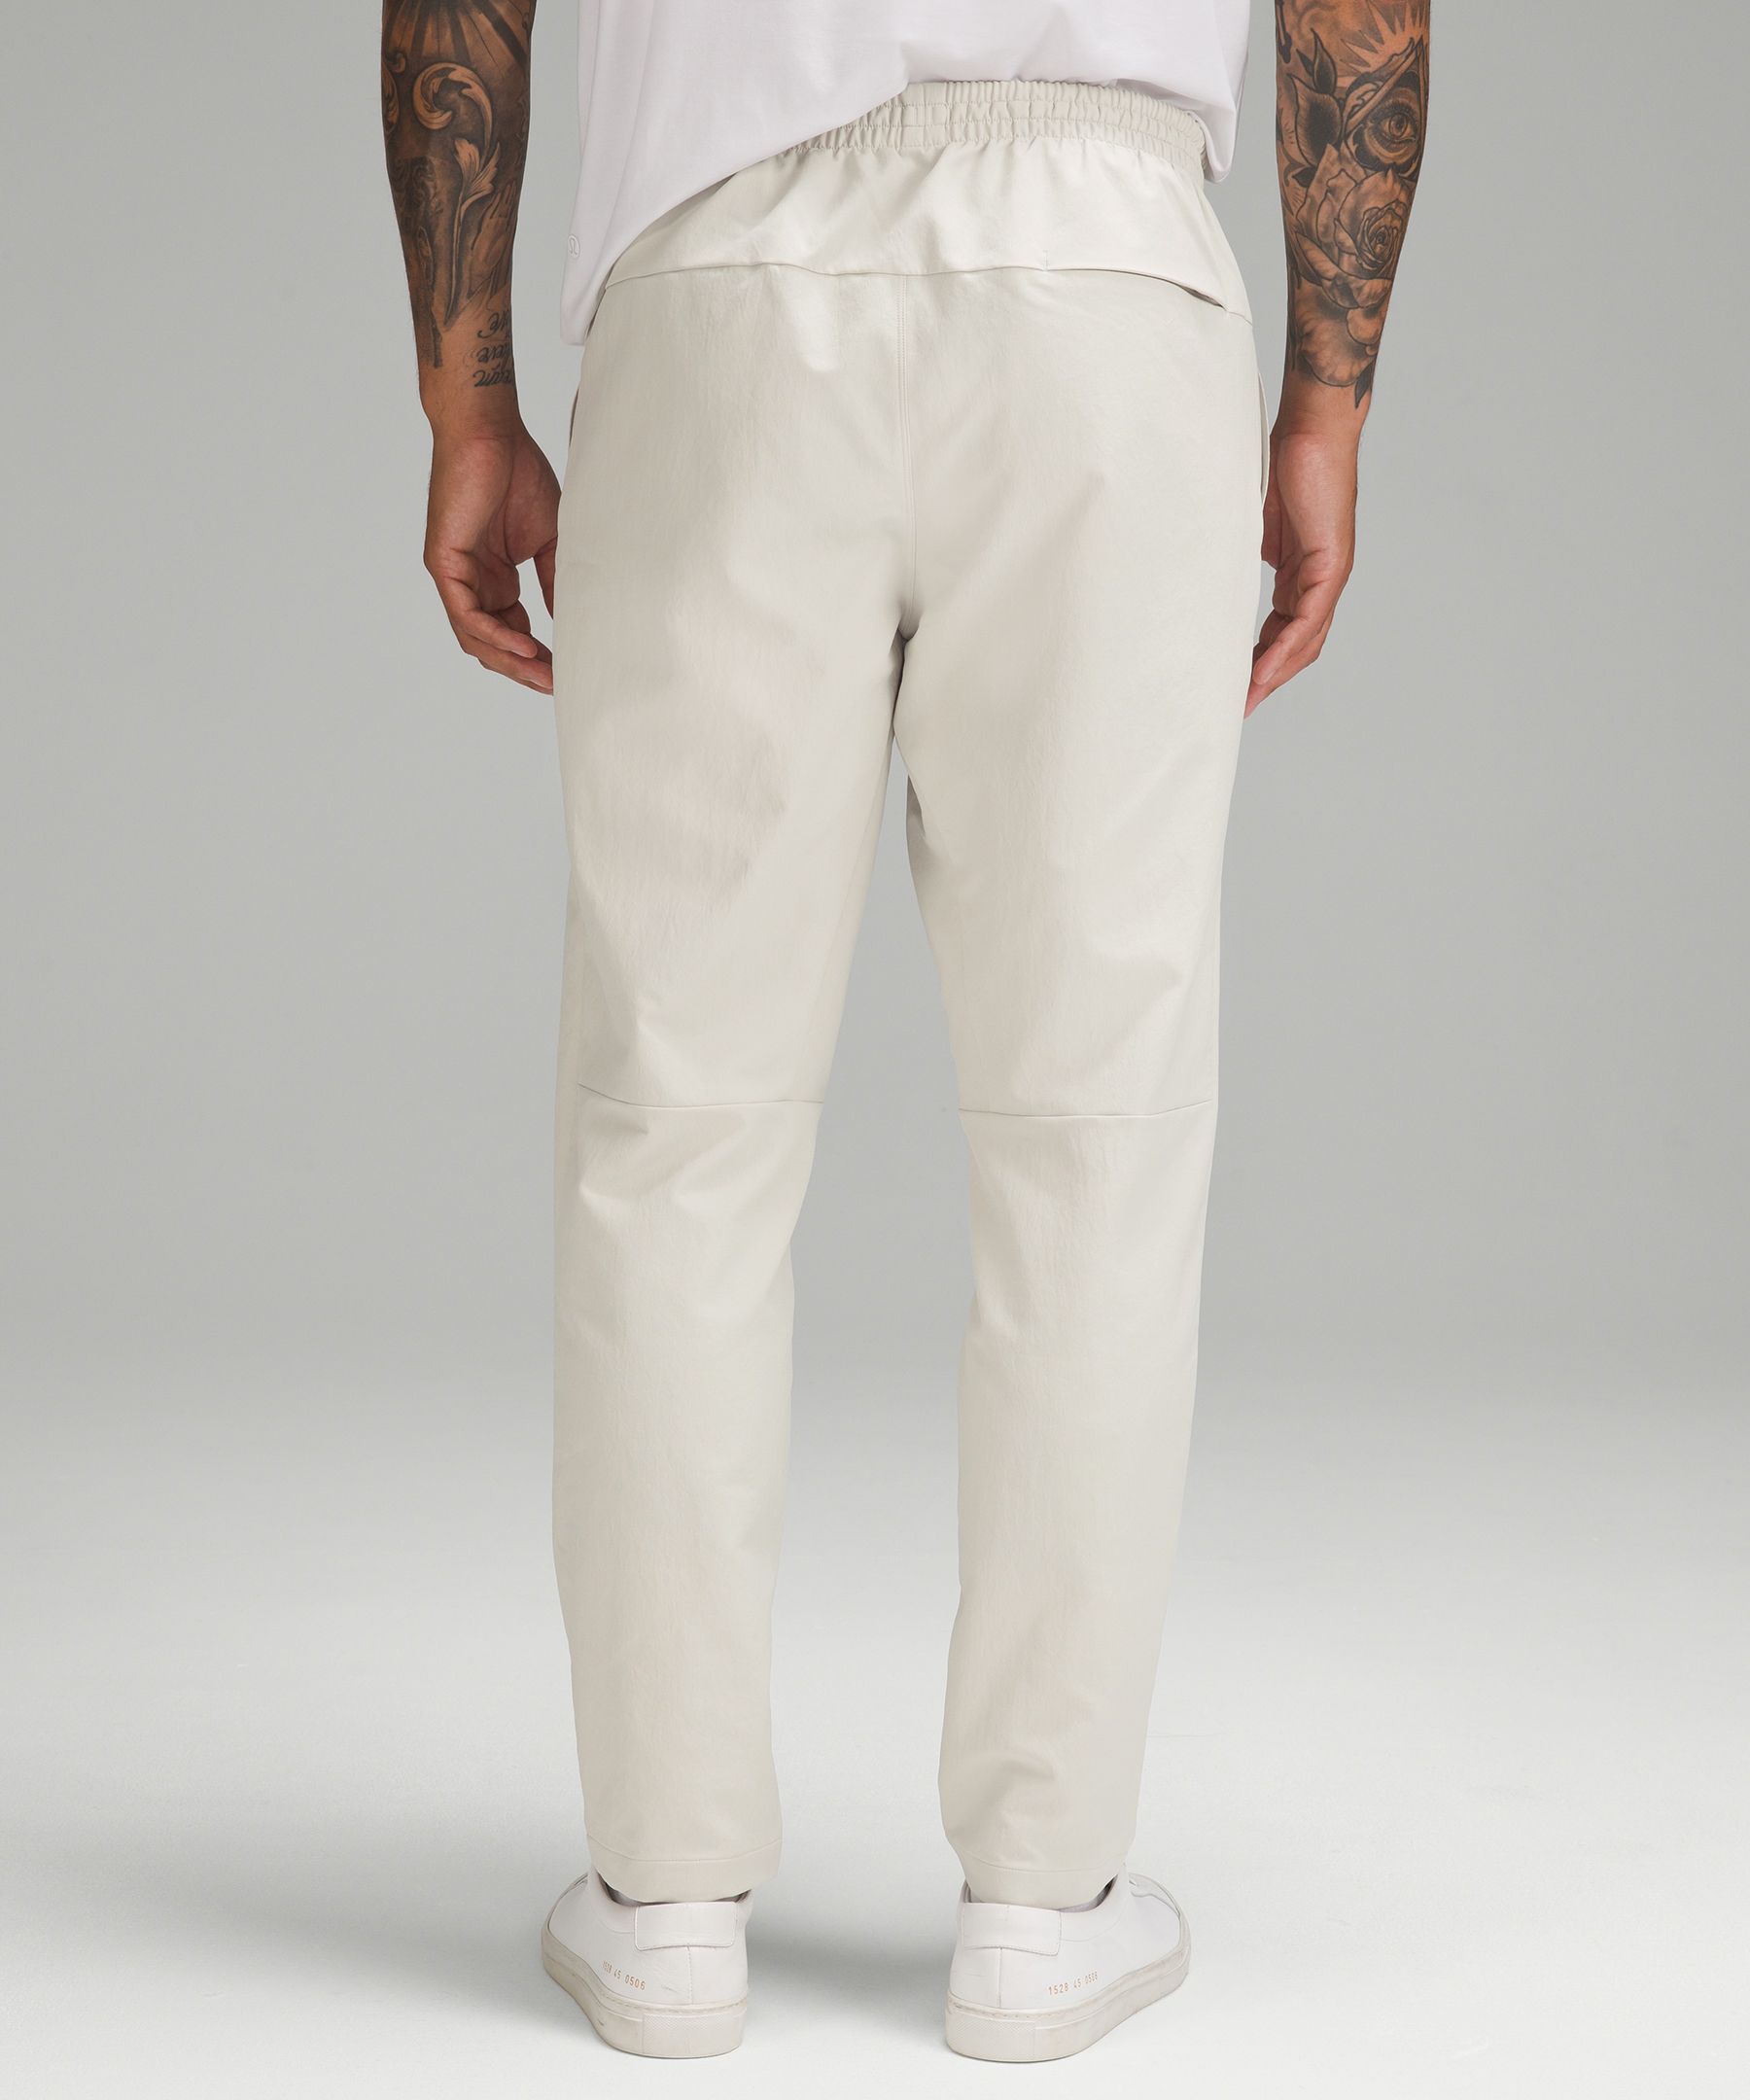 Lululemon &Go City Trek Trousers Pant Black Size 10 - $85 (42% Off